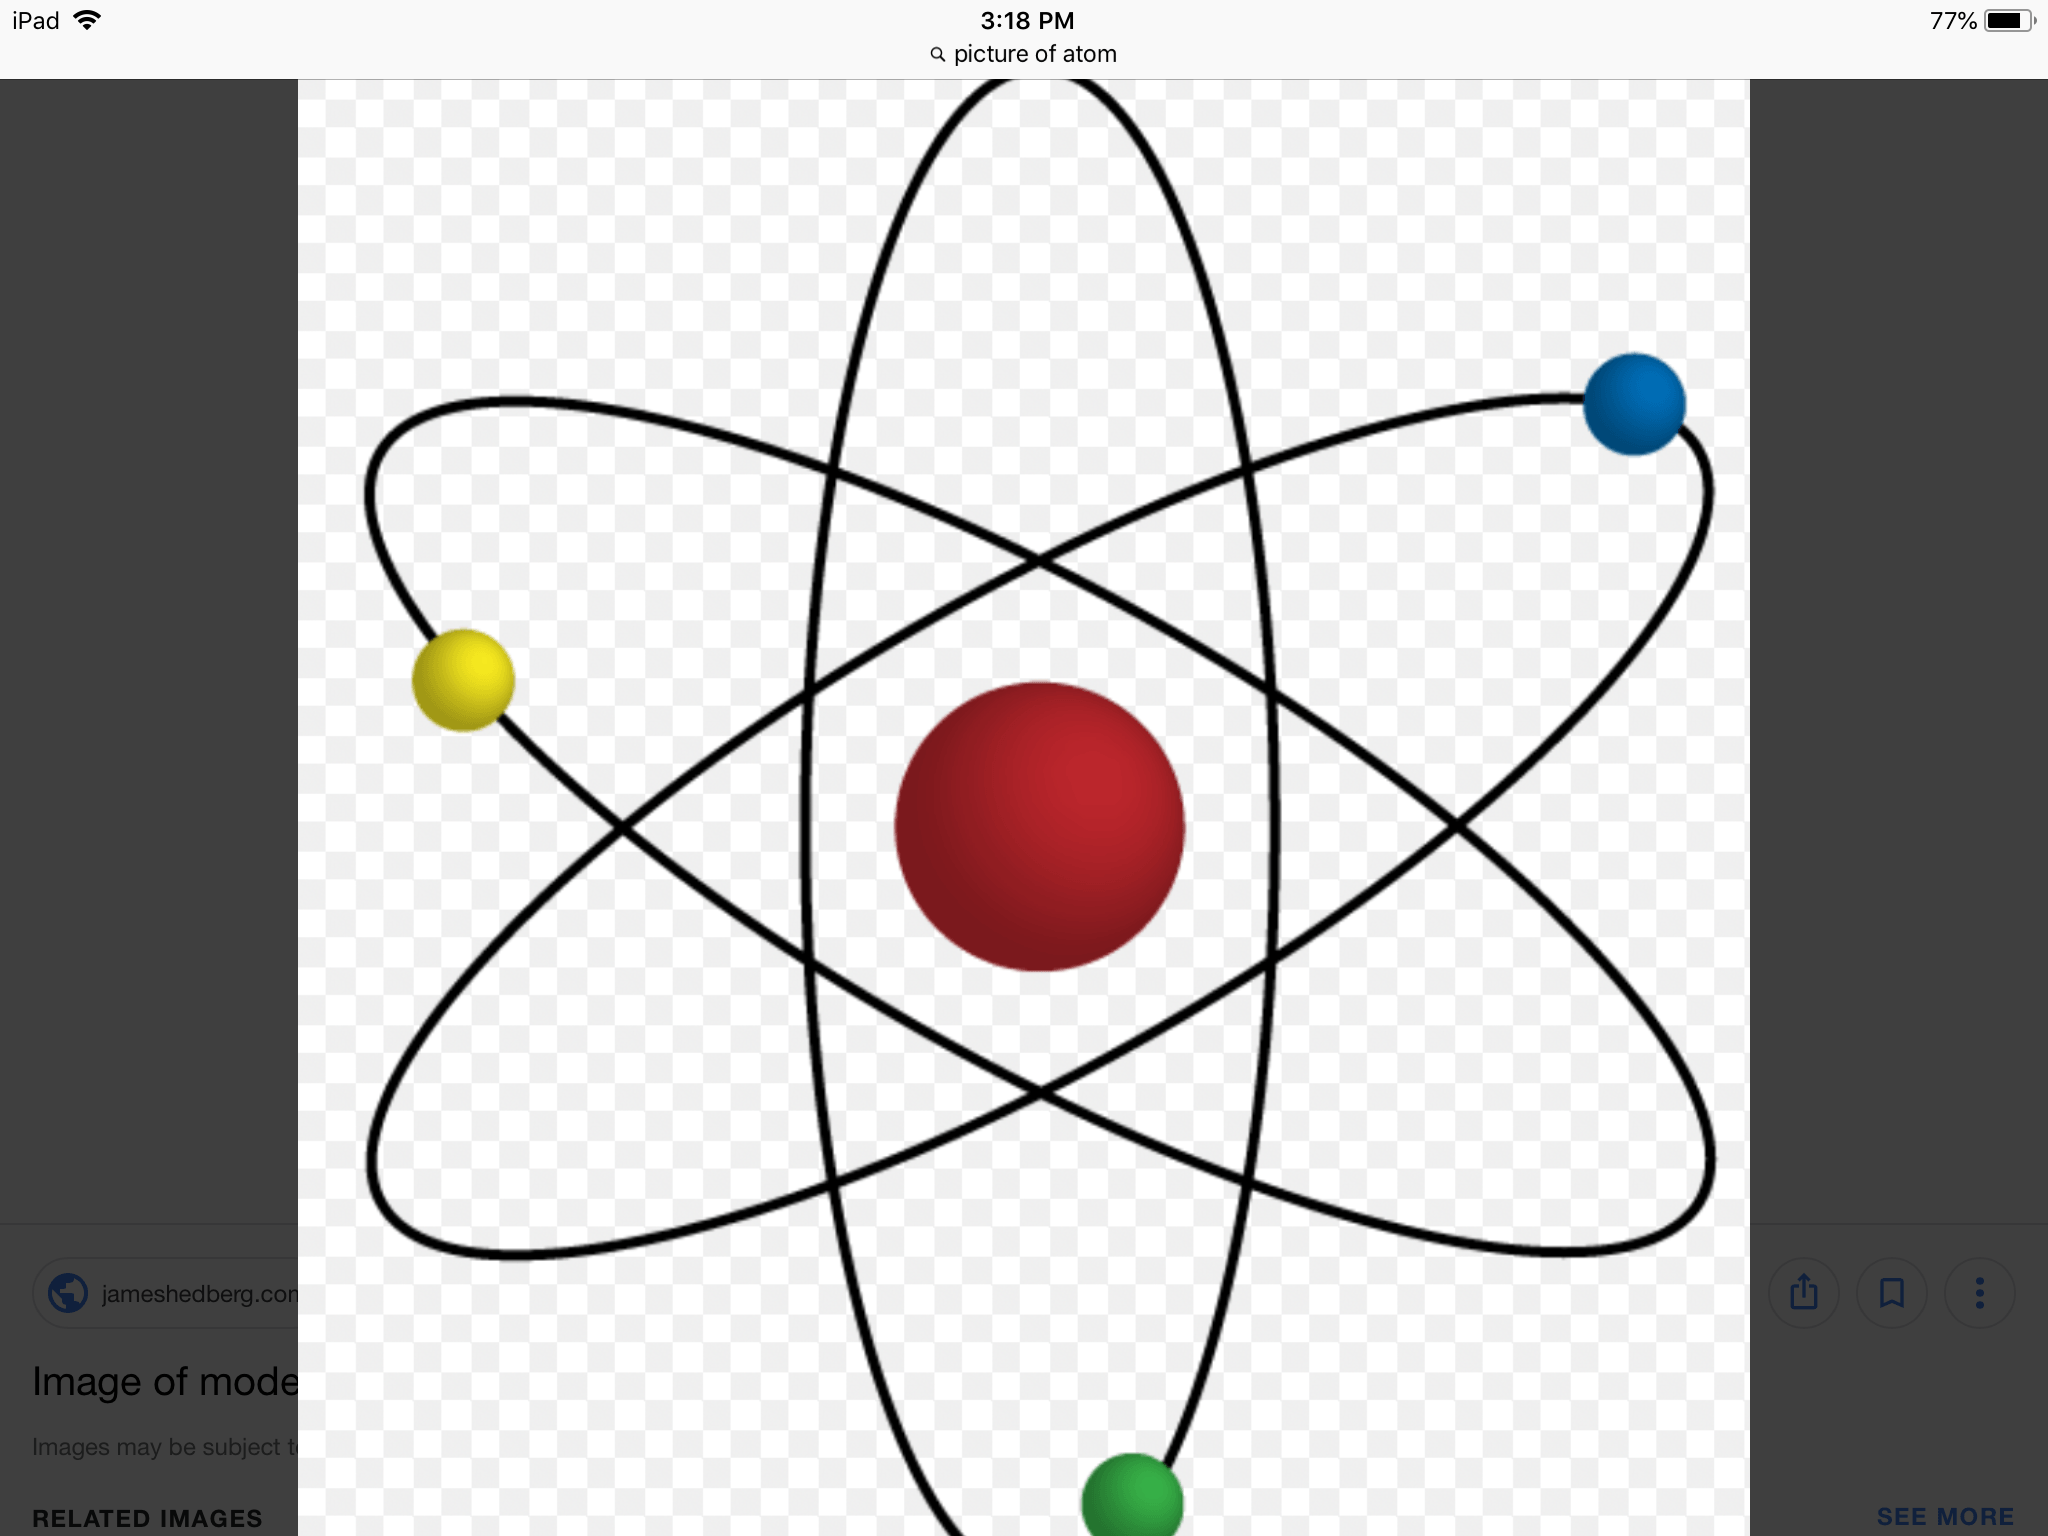 Атомное ядро Резерфорд рисунок